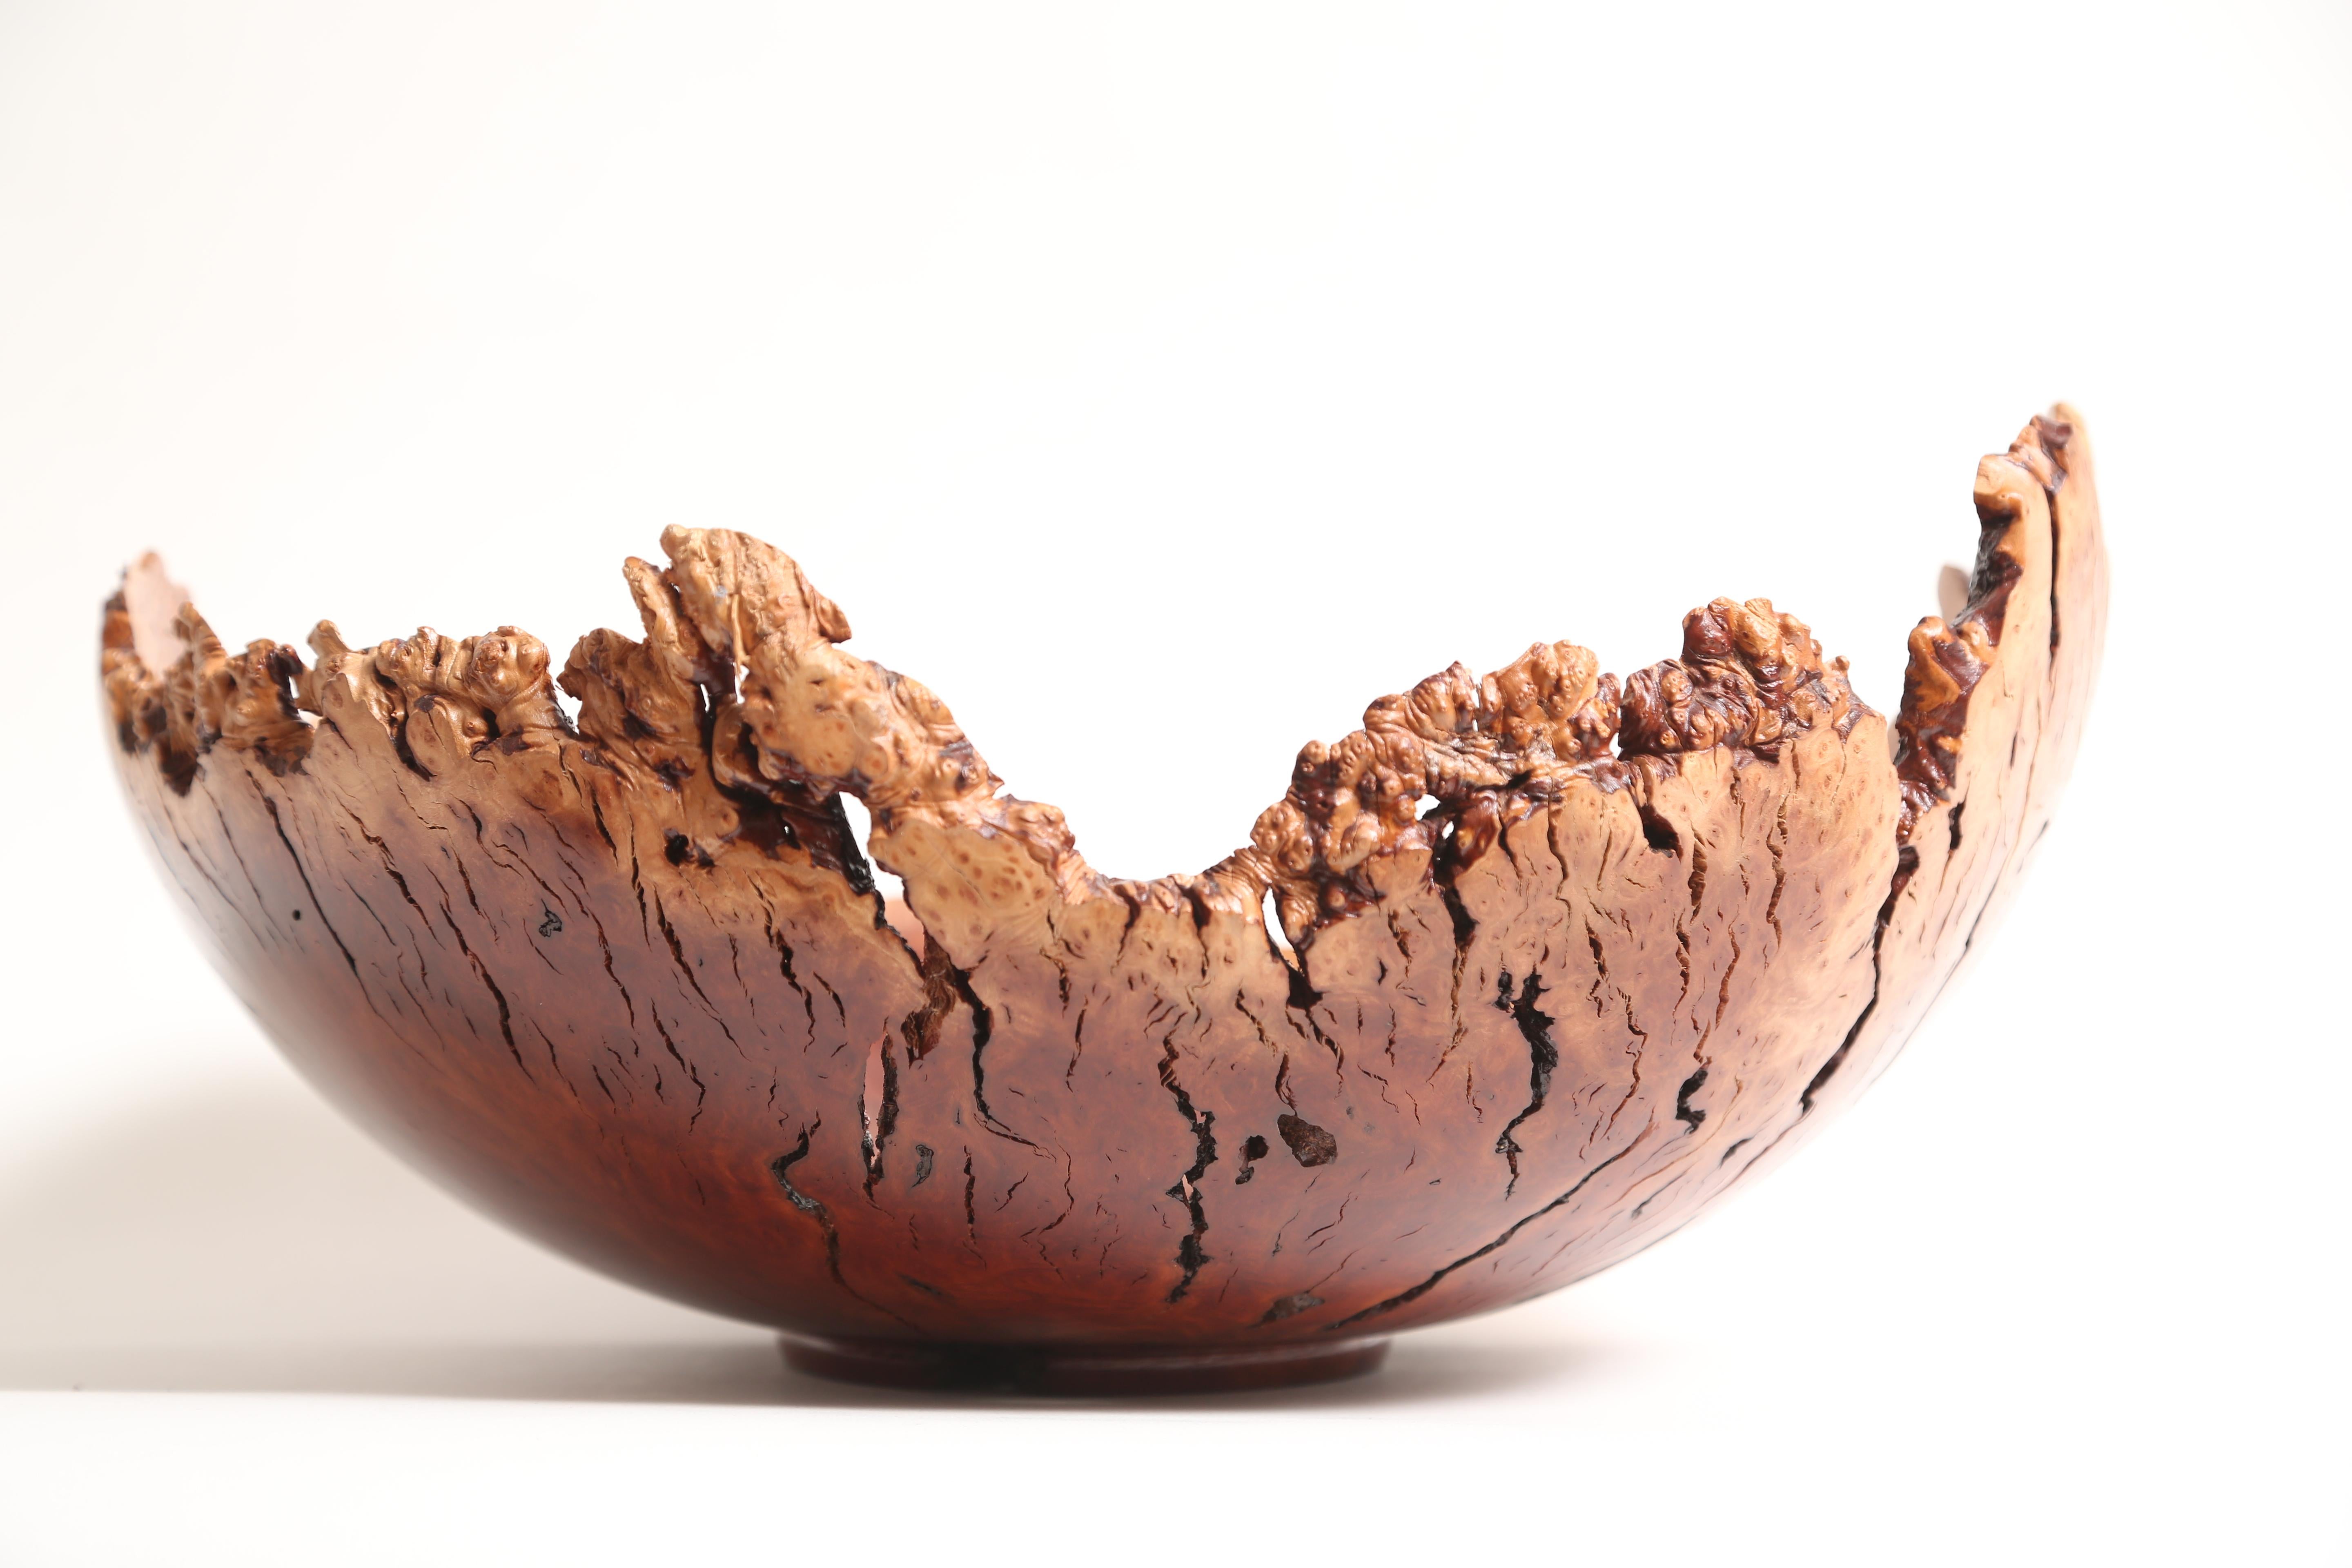 A large Manzanita wood bowl.
Expressive grain and free-edge
Manzanita is a species of evergreen.